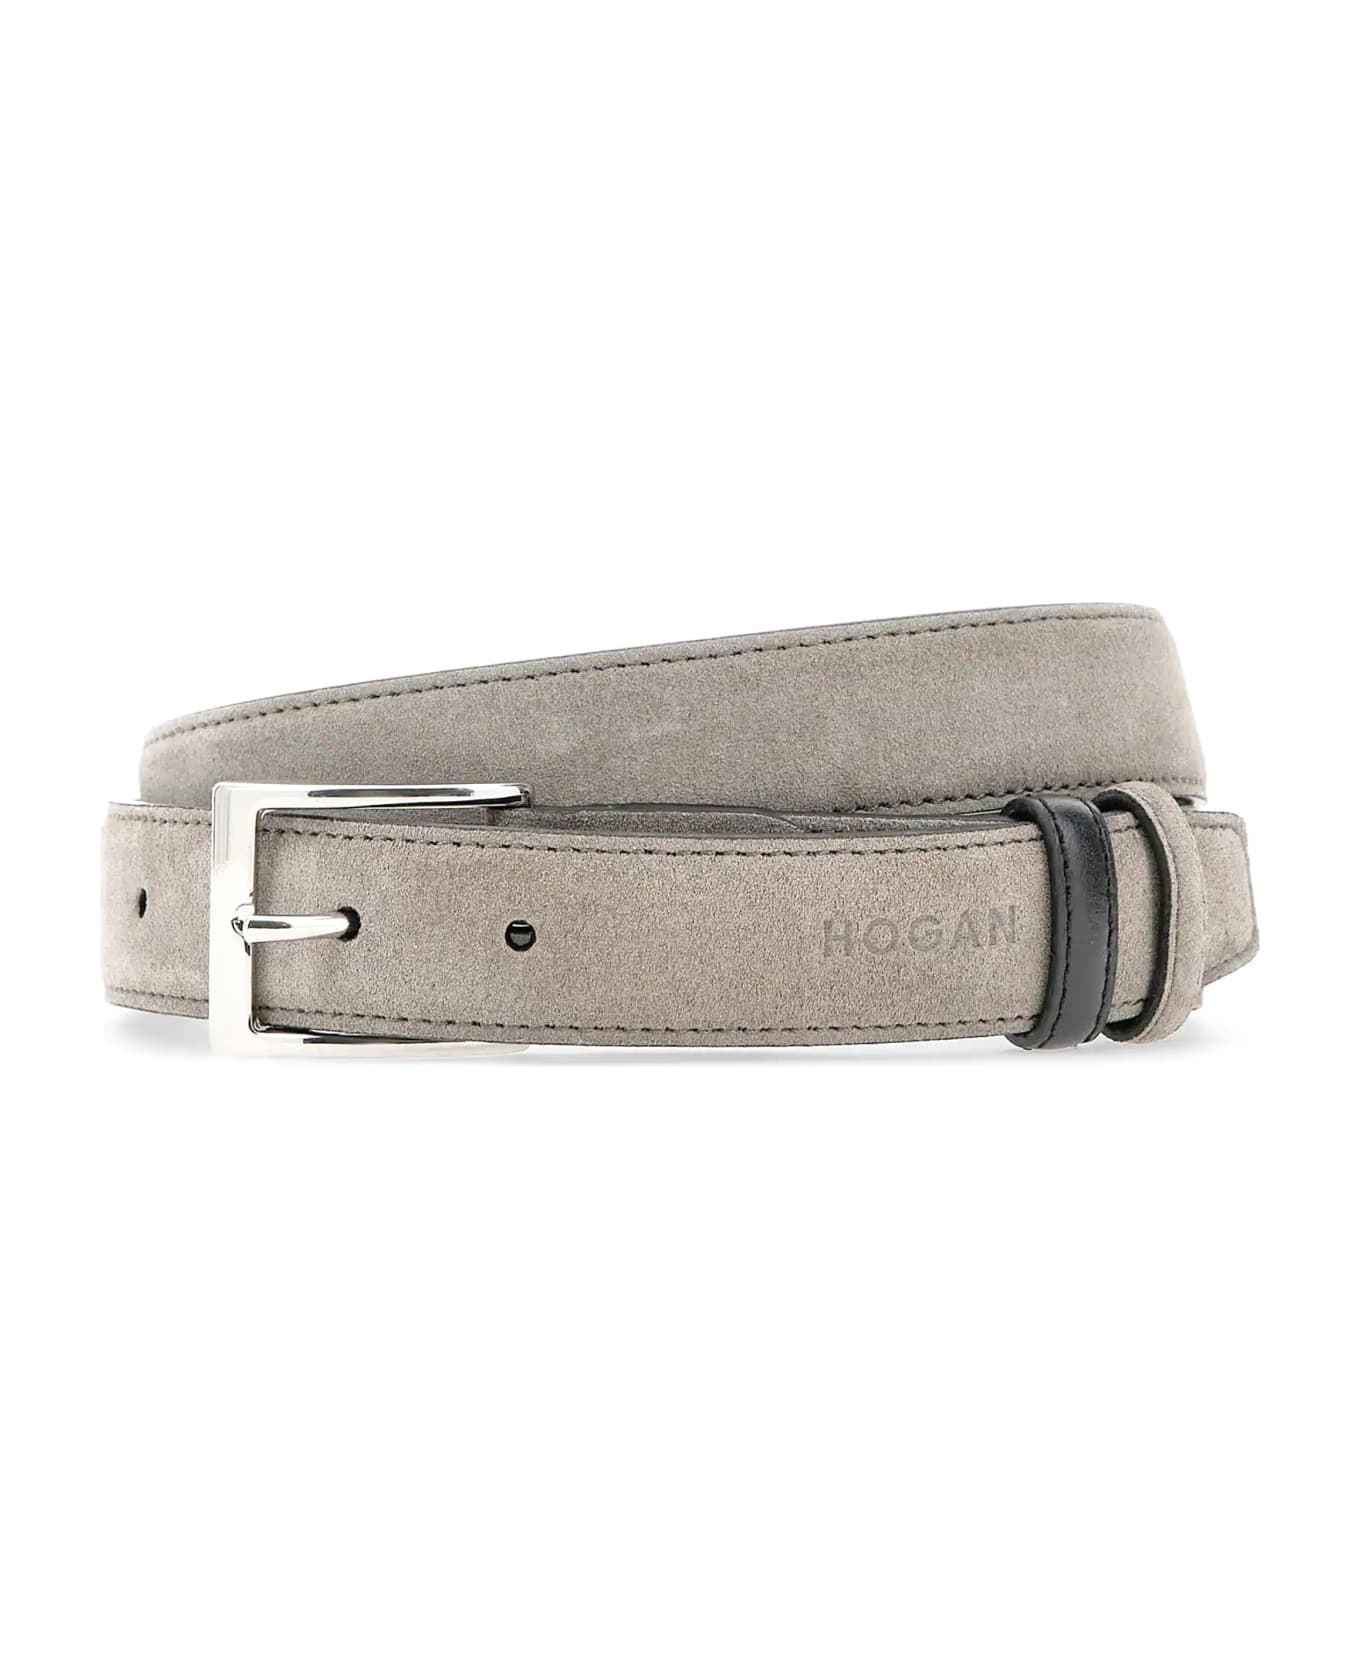 Hogan Leather Belt With Embossed Logo - Grey